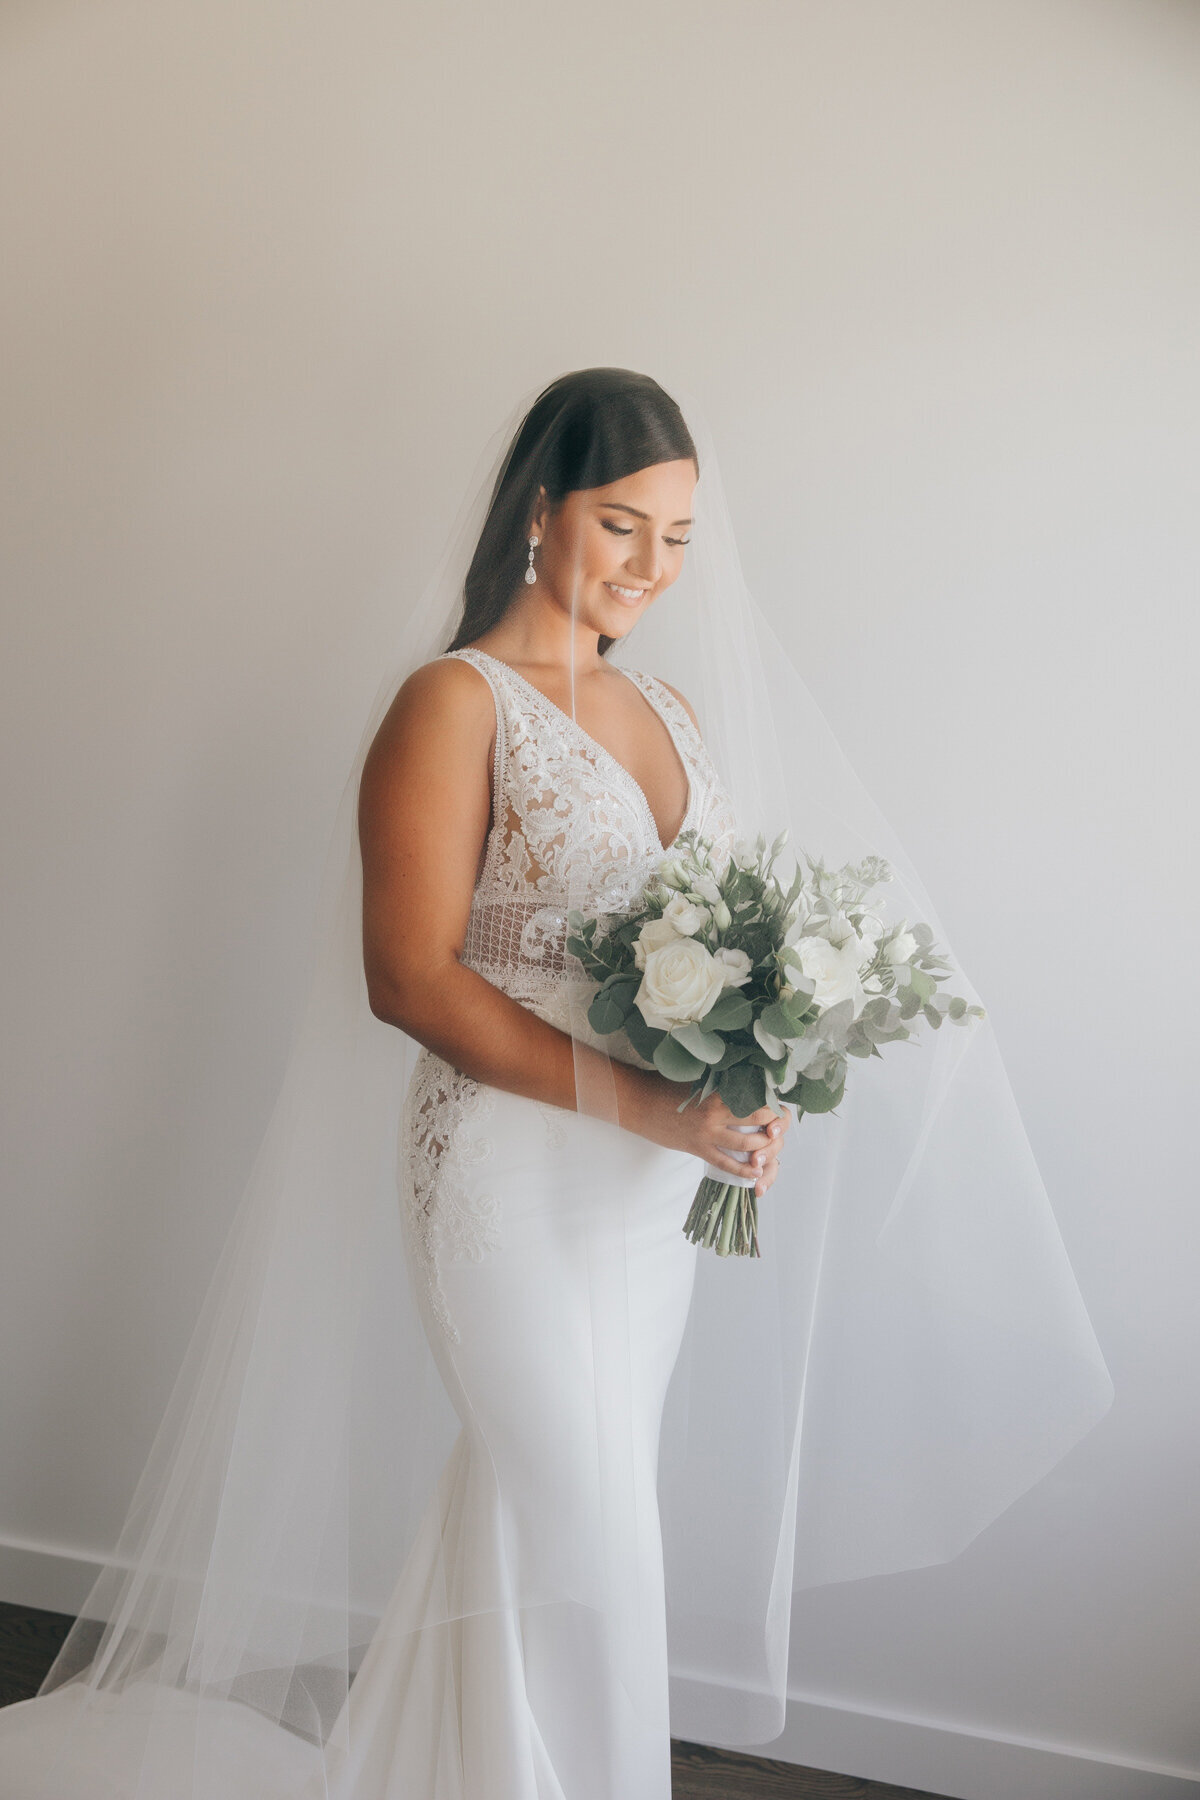 Elegant bride posing in her white wedding dress while holding her white wedding bouquet